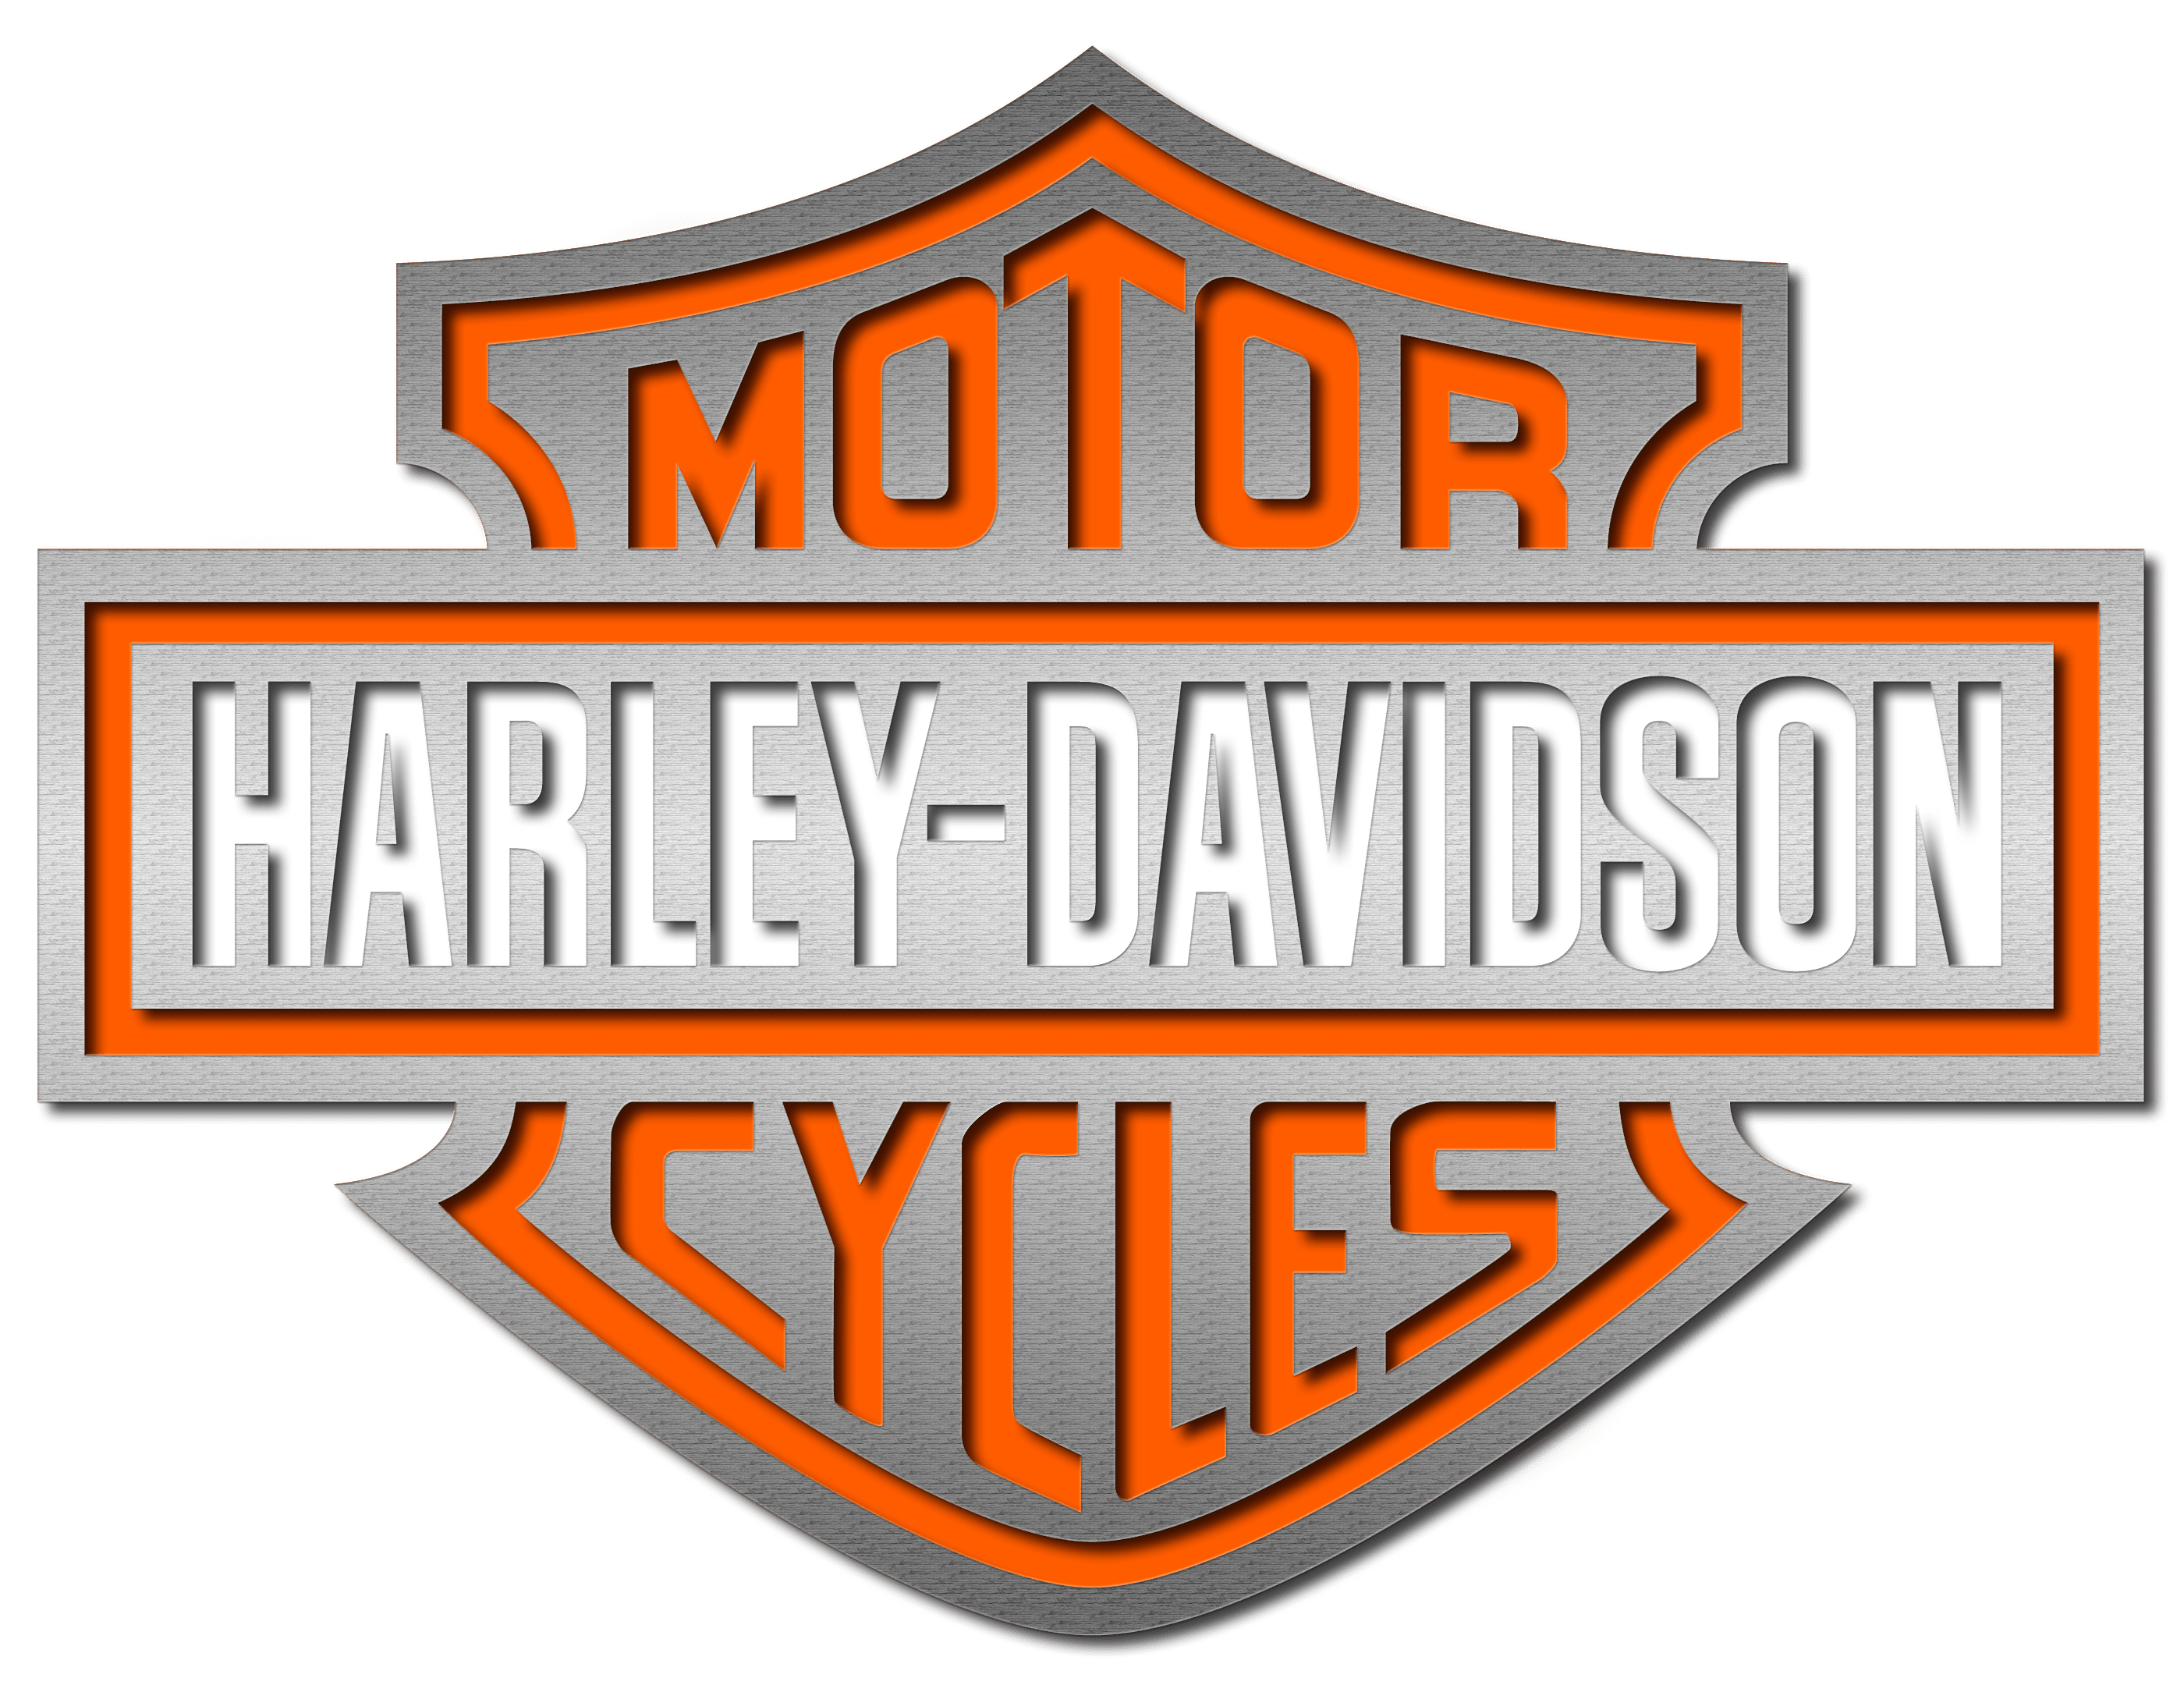 Printable Harley Davidson Logo